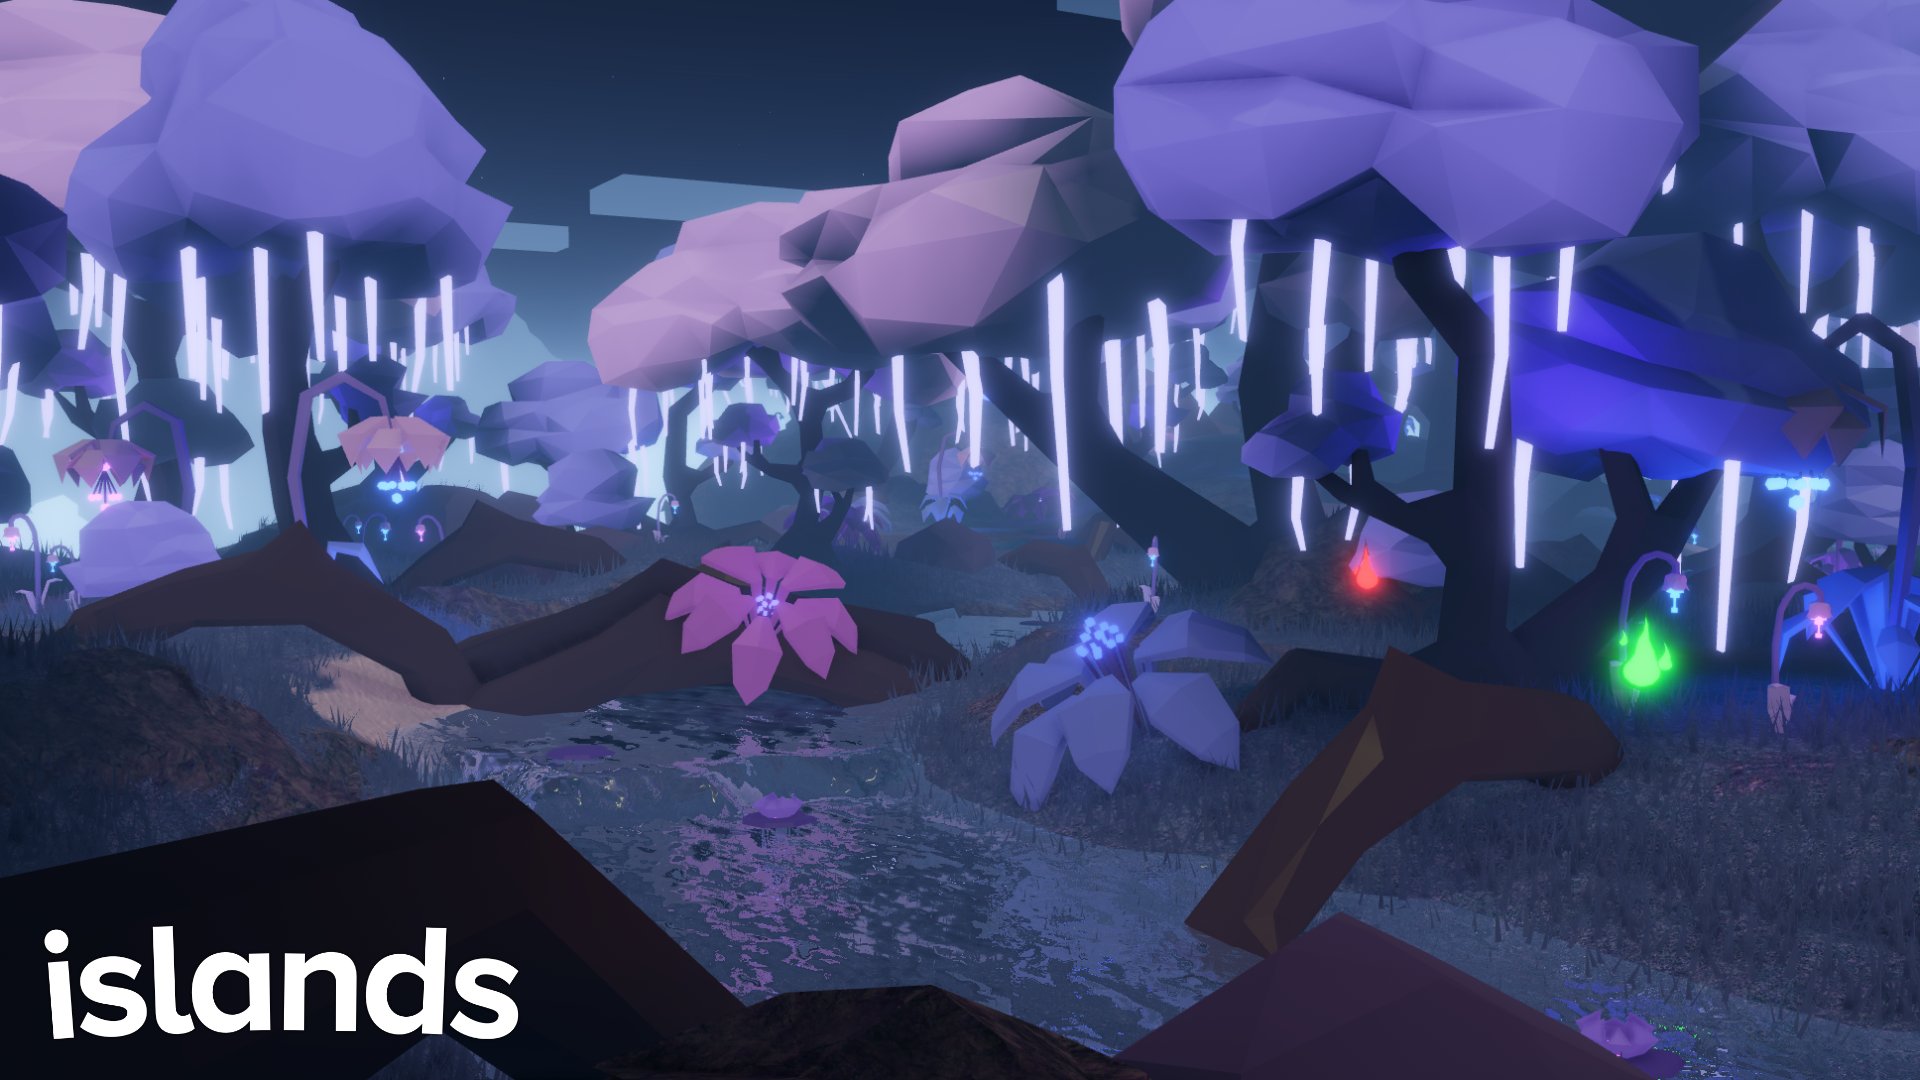 Roblox Islands update is live! ✨ Added Spirit Island